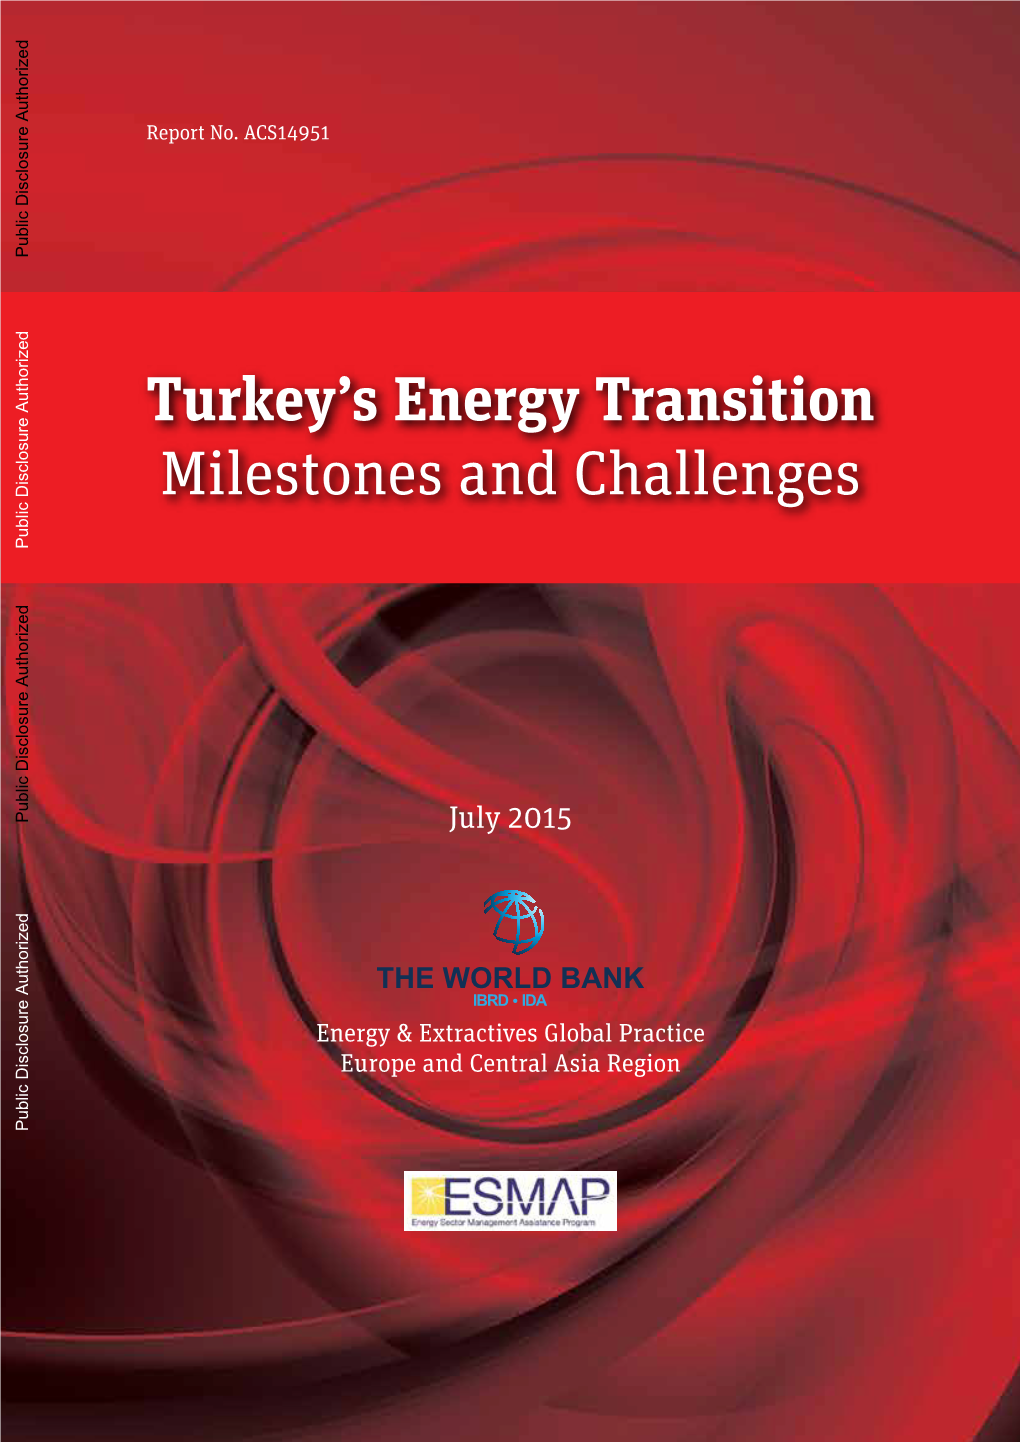 Turkey's Energy Transition